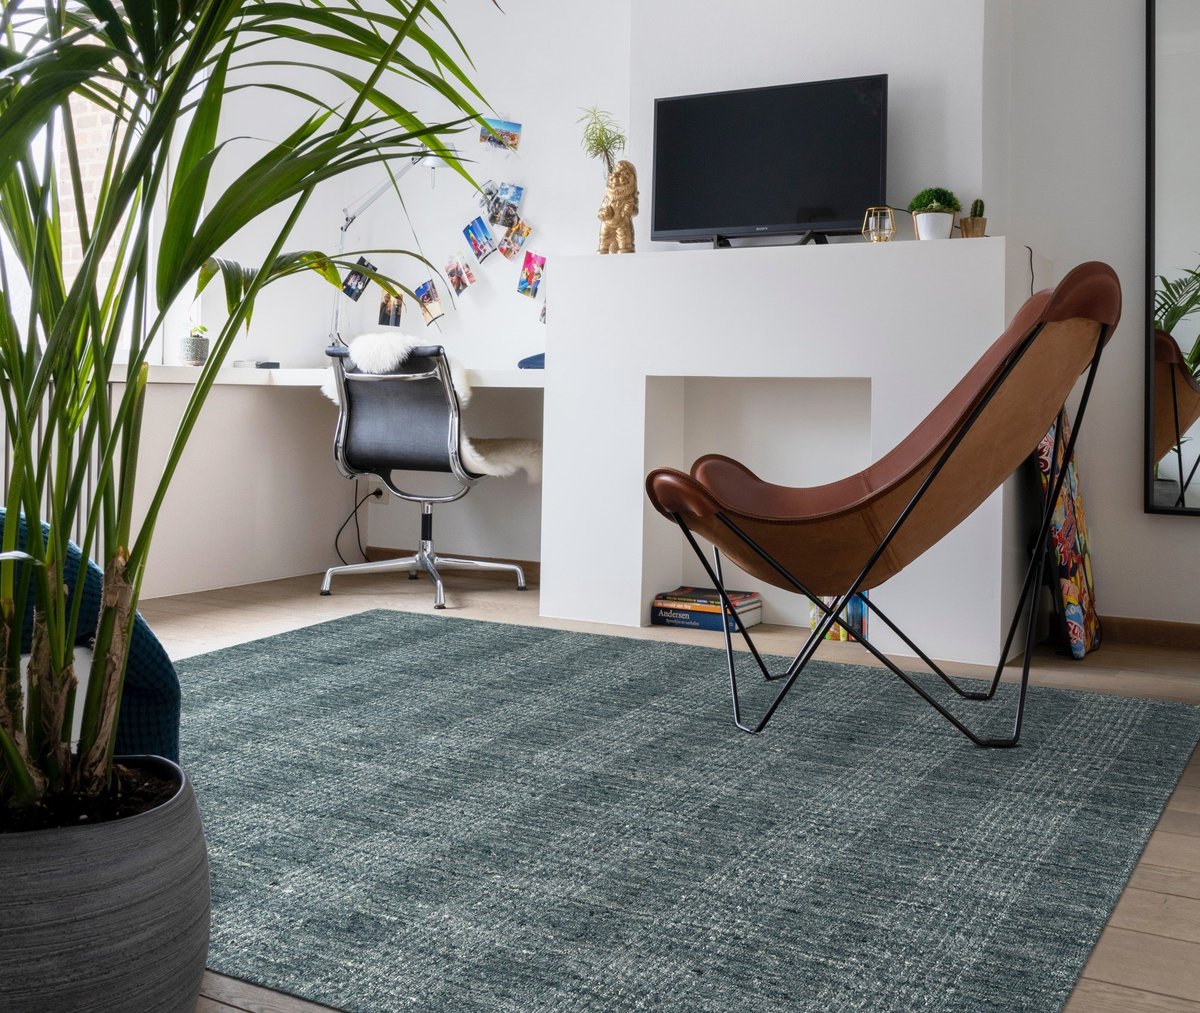 Multiuse Living Room Decor Ideas